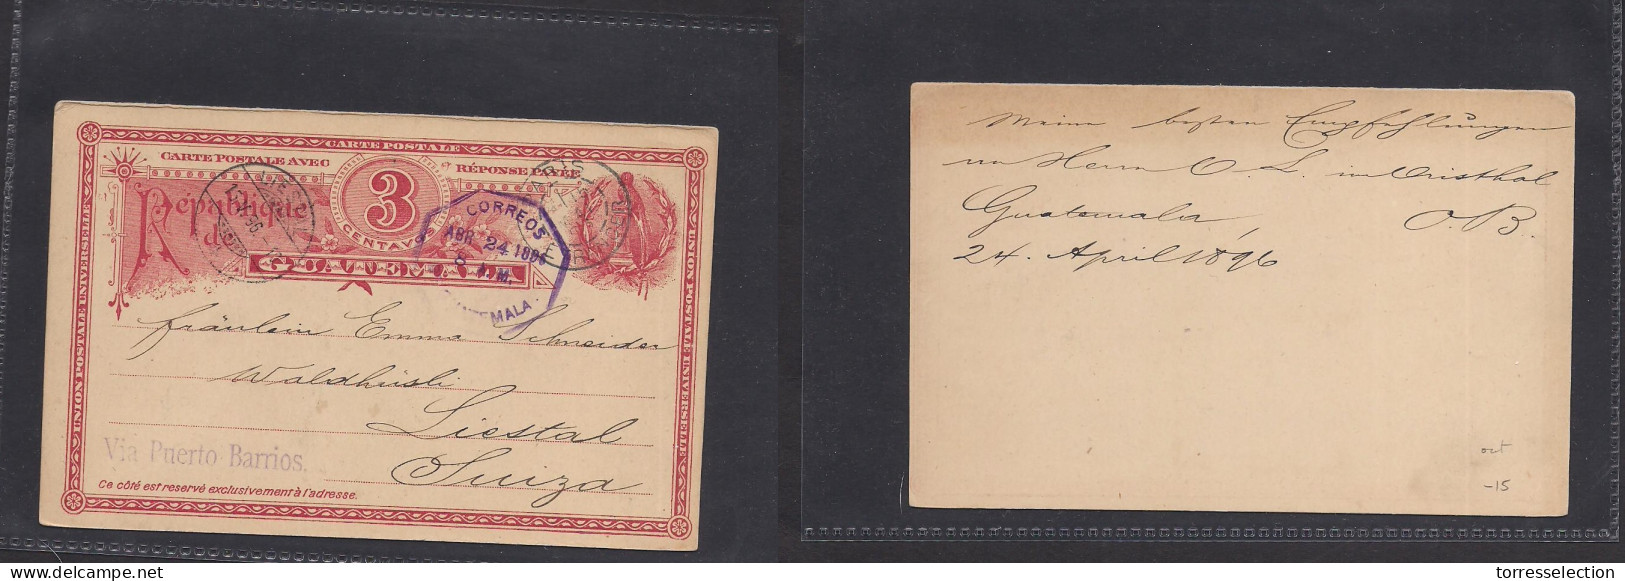 GUATEMALA. 1896 (24 Apr) GPO - Switzerland, Liestal (15 May) 3c Red Stat Card Via Paris - Puerto Barnos. Fine. XSALE. - Guatemala